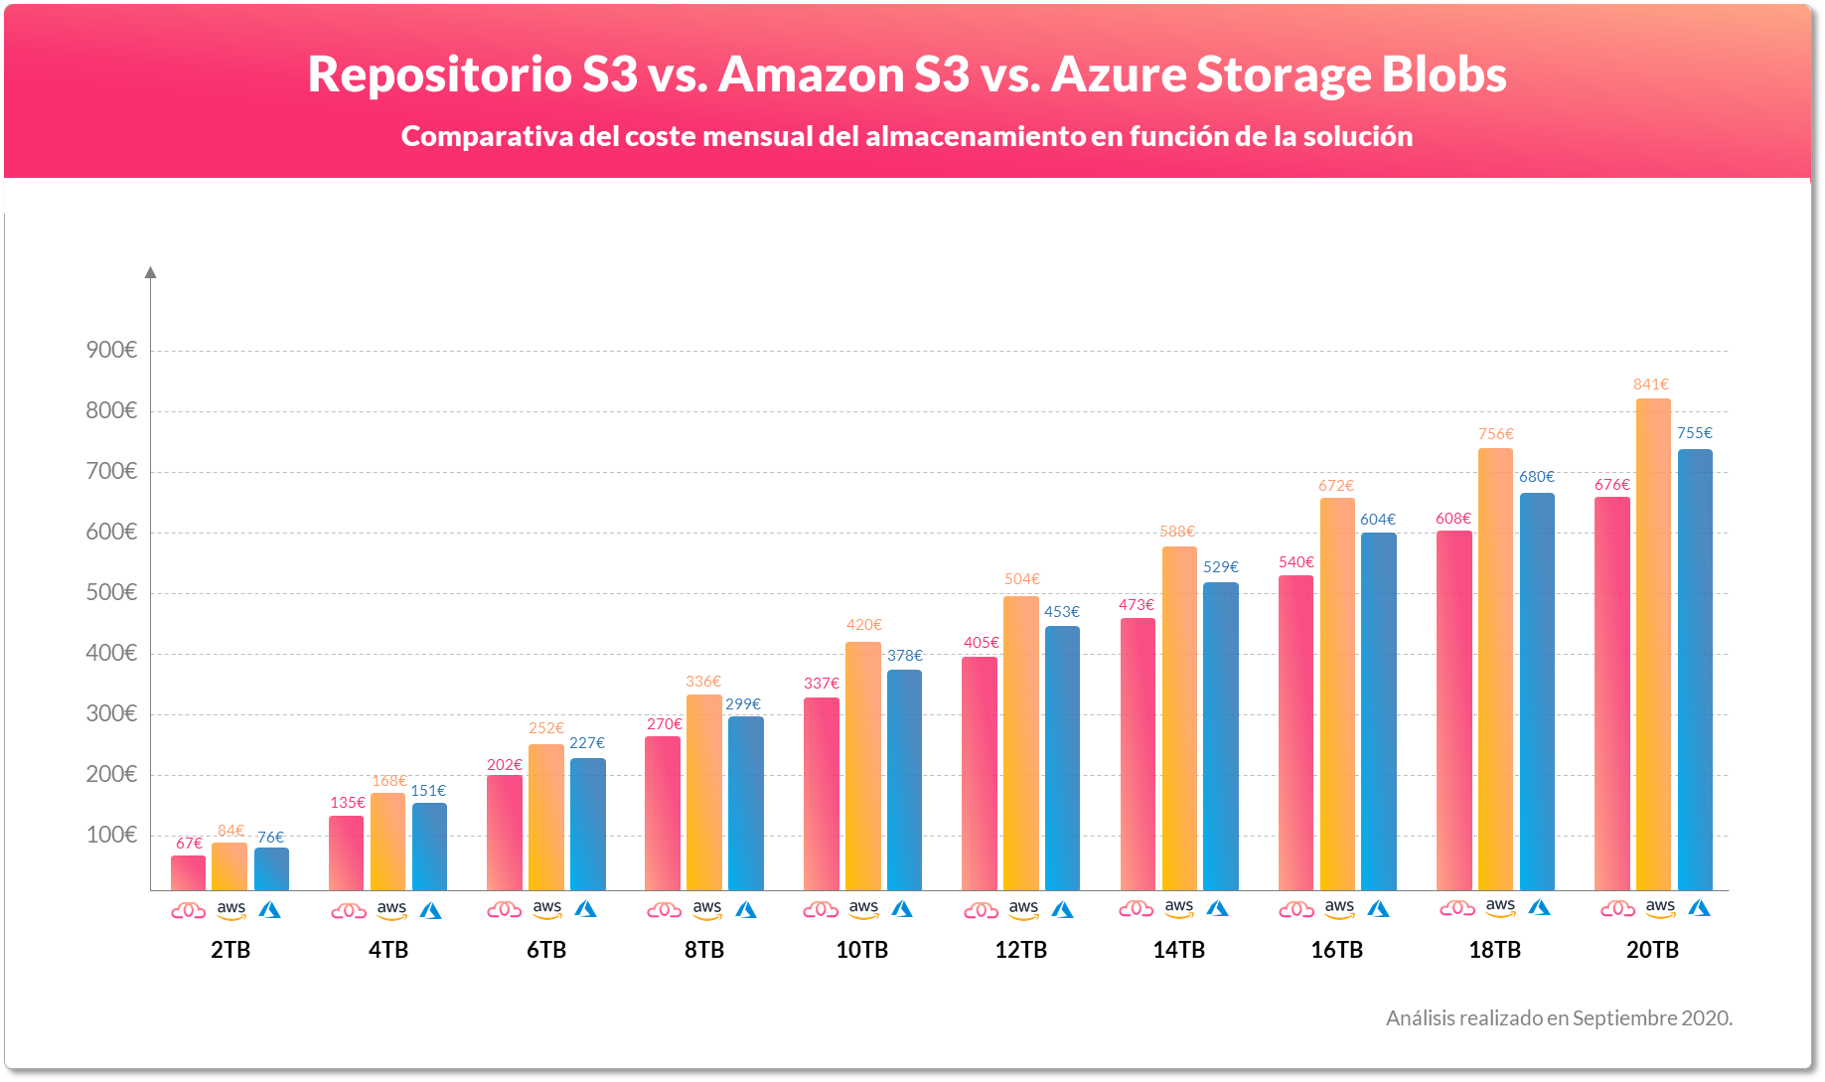 Comparison of monthly cost per TB for S3 Buckets vs. Amazon S3 vs. Azure Storage Blobs